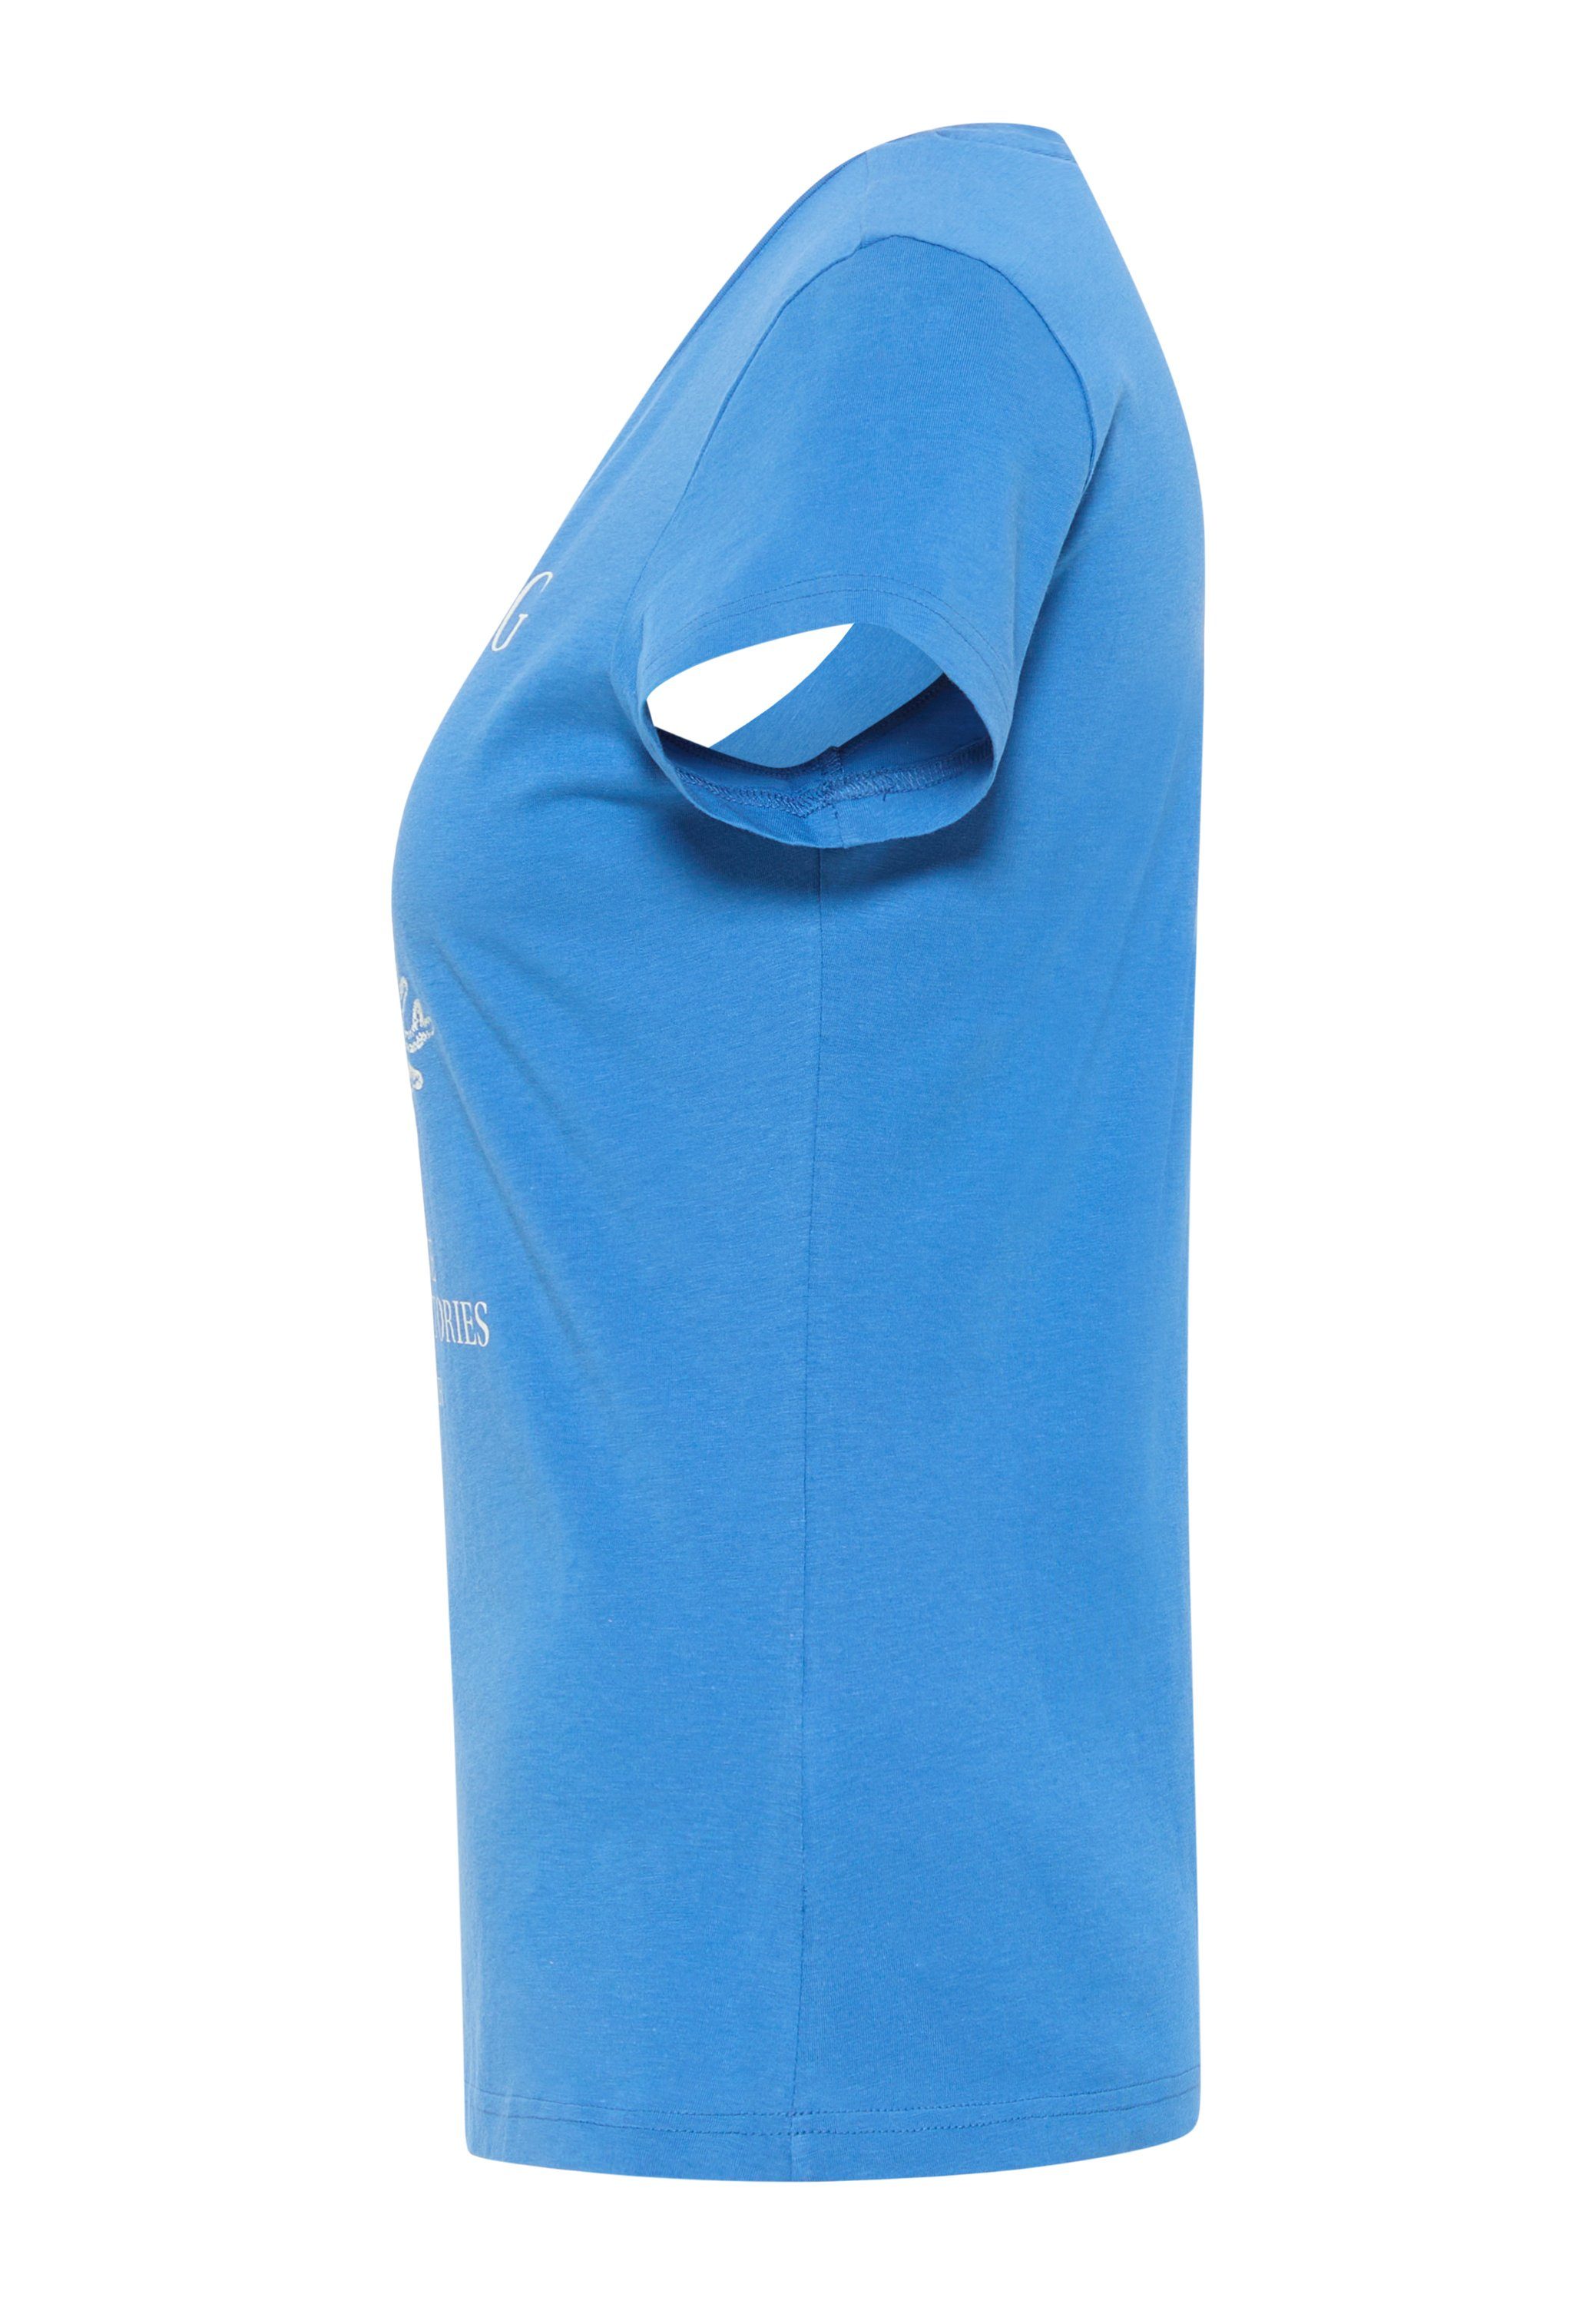 MUSTANG Kurzarmshirt Mustang T-Shirt blau Print-Shirt